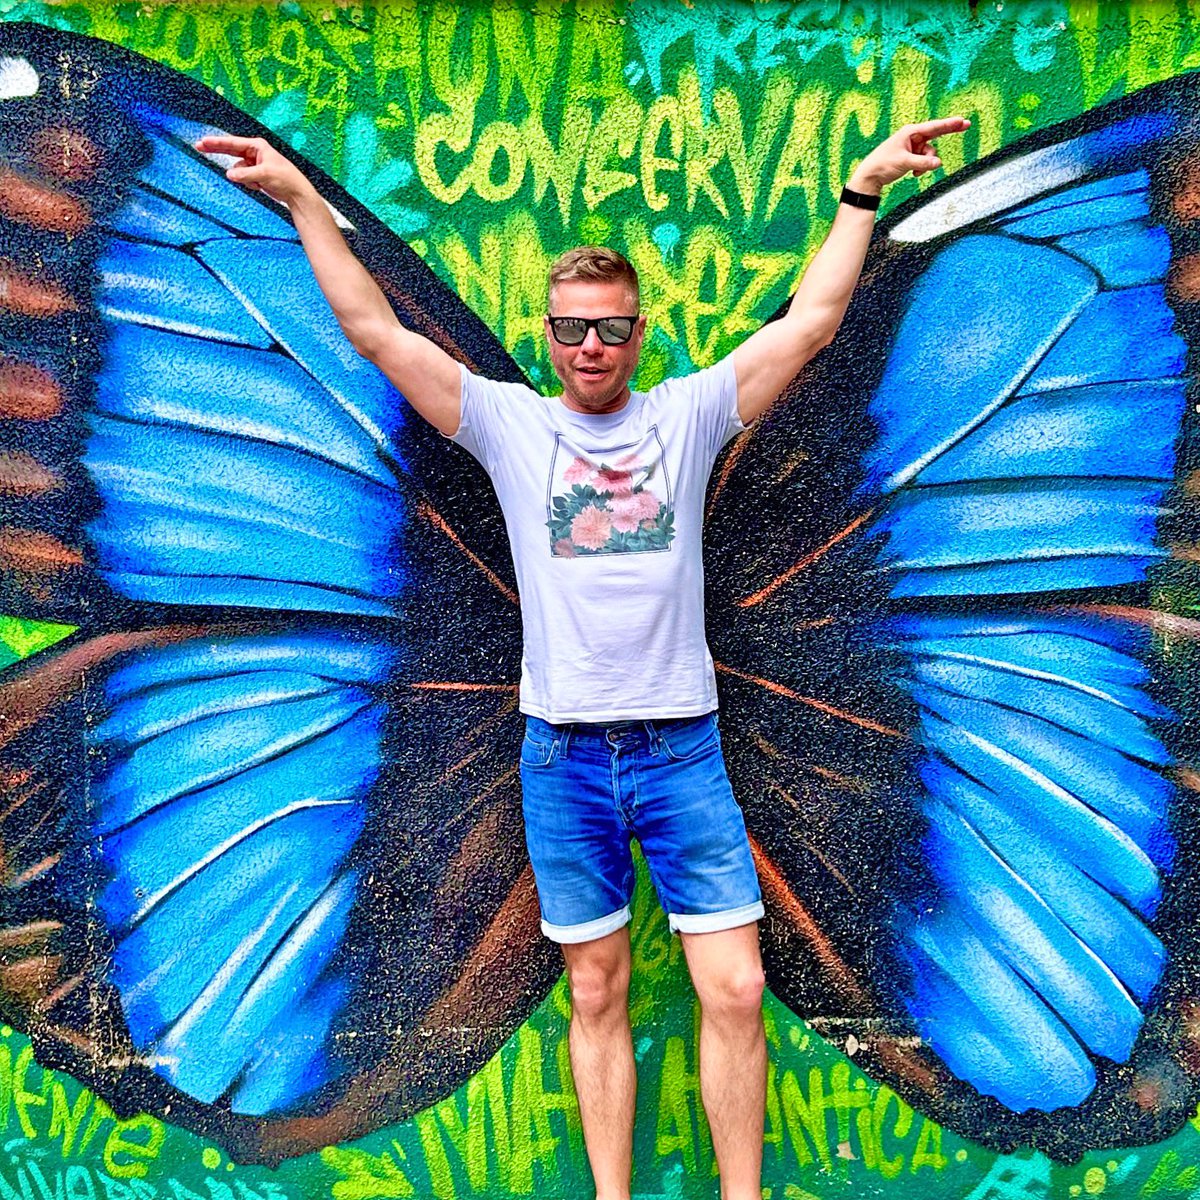 Wings wide, heart open—letting the magic of Rio's street art carry me away on a breeze of inspiration!
 
#StreetArt #RioDeJaneiro #WingedWonder #RioMagic #ButterflyDreams #ilovegay #zaddy